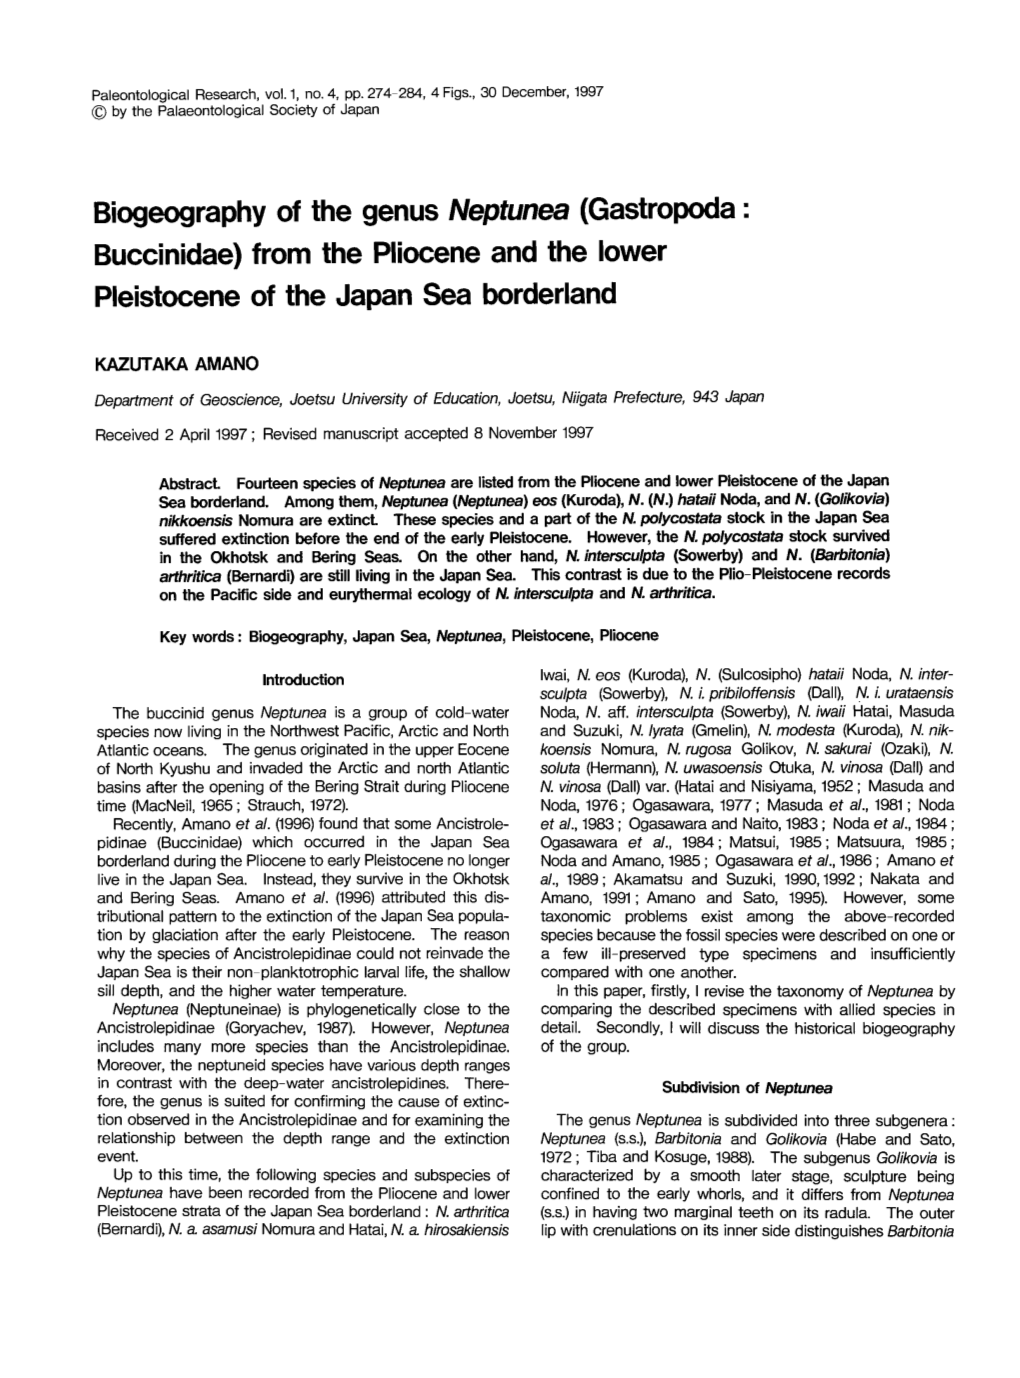 Biogeography of the Genus Neptunea (Gastropoda: Buccinidae) from the Pliocene and the Lower Pleistocene of the Japan Sea Borderland